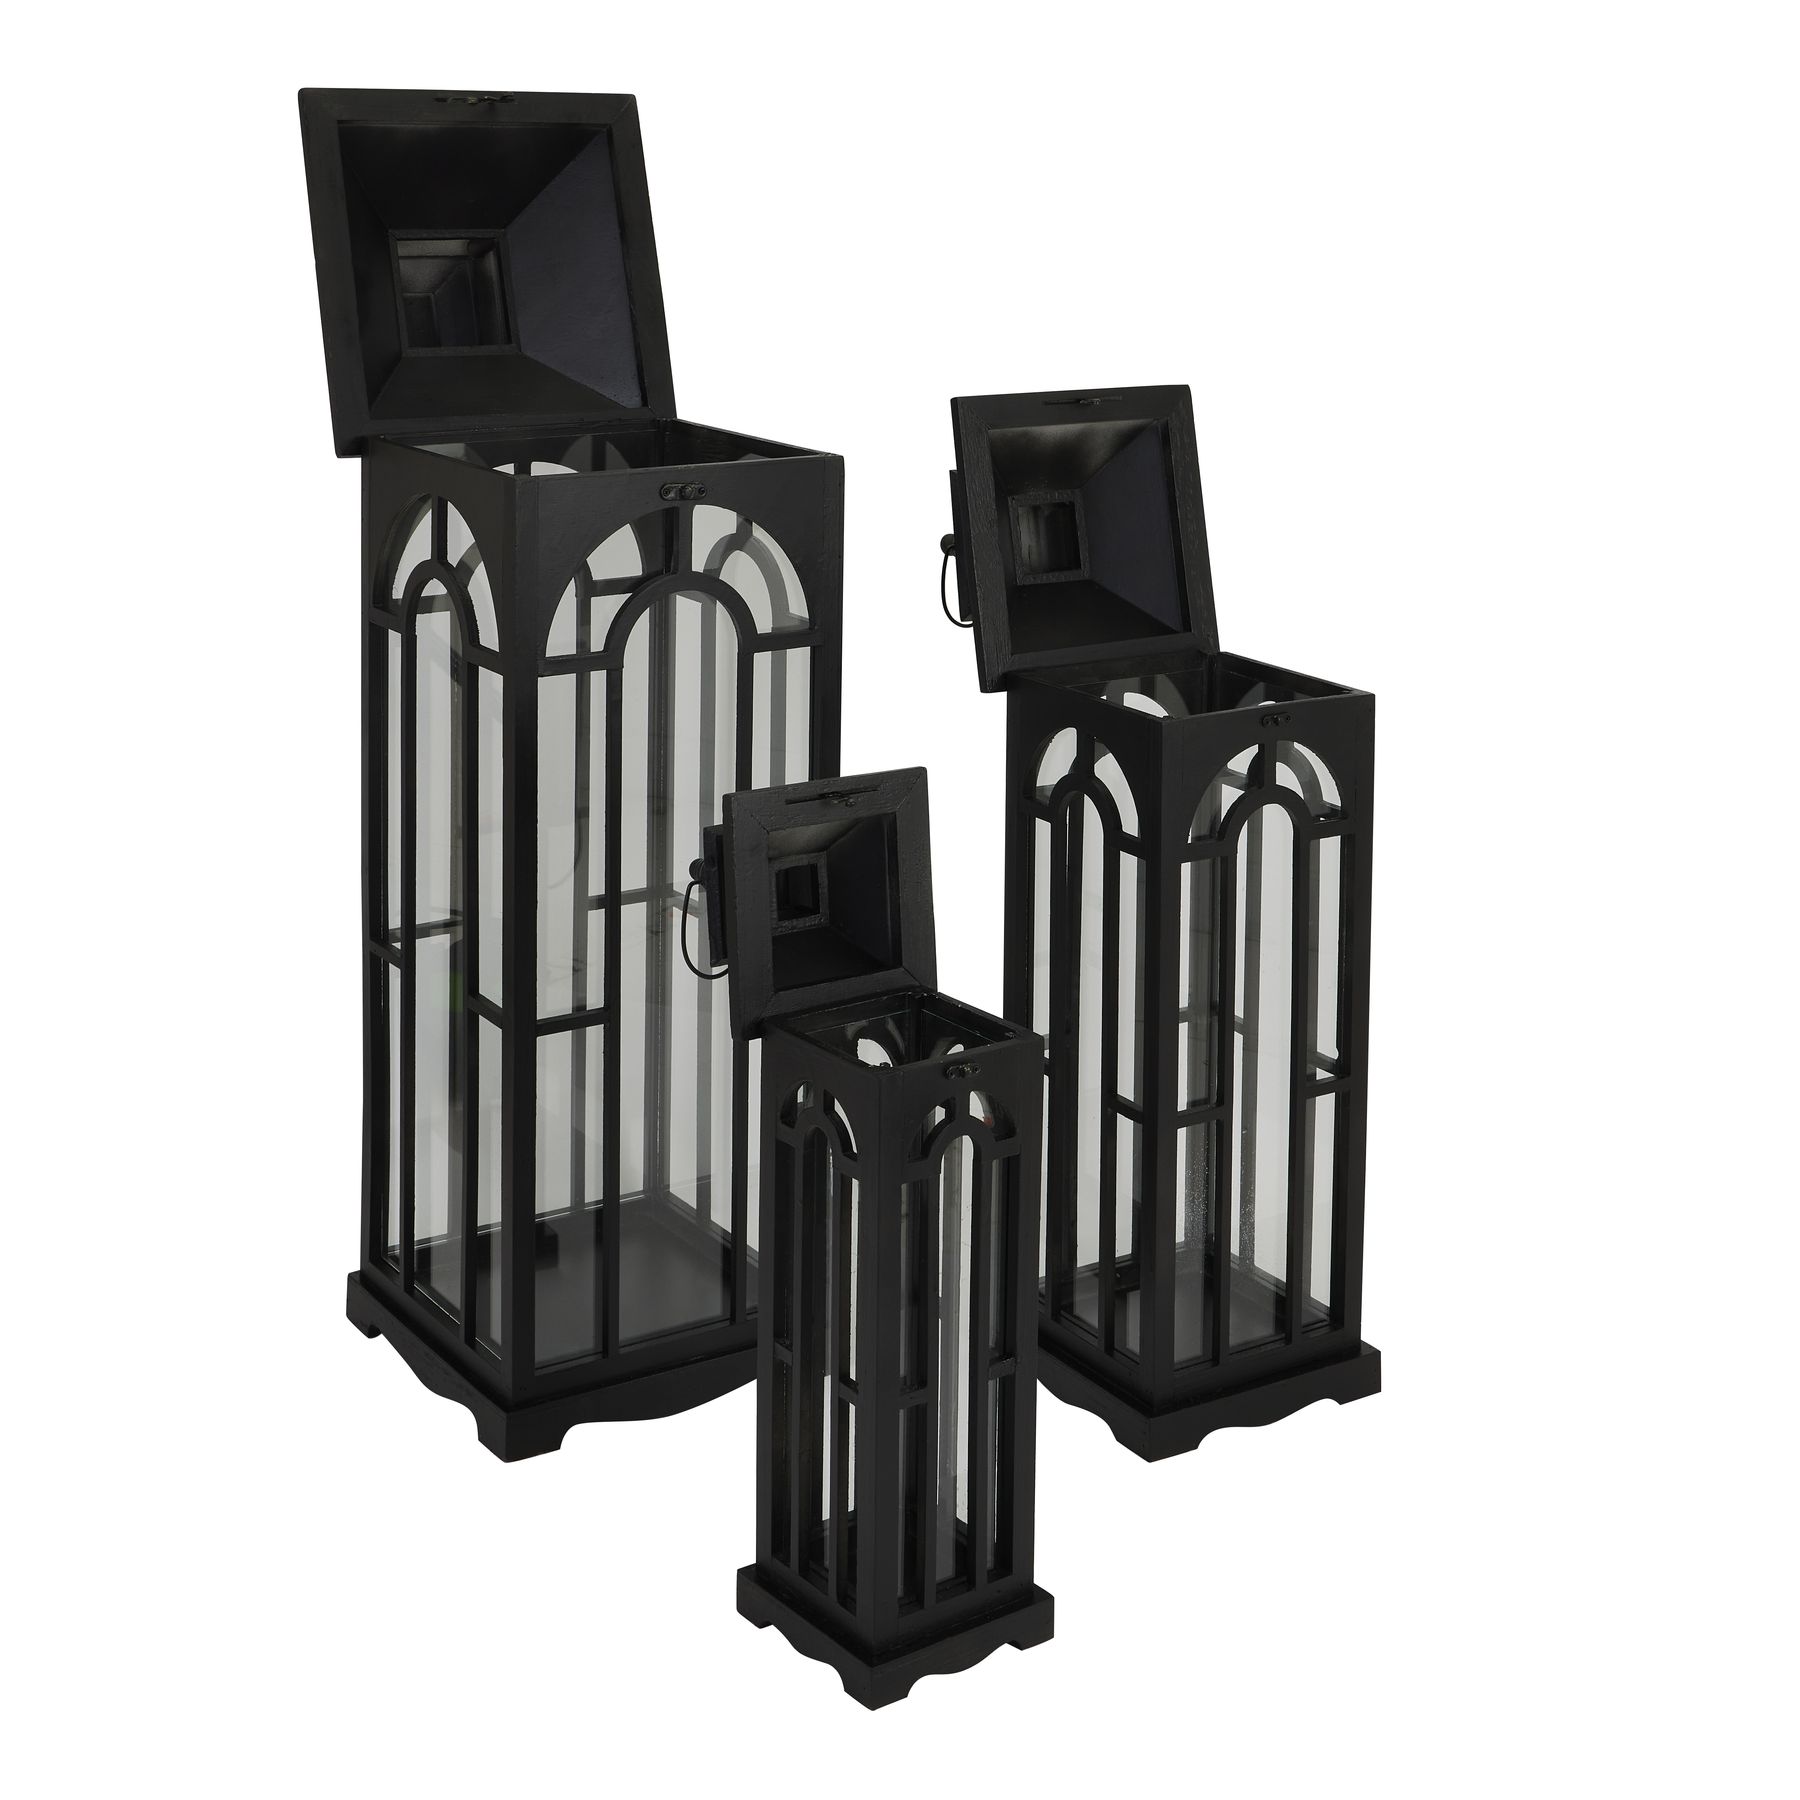 Set Of Three Black Wooden Lanterns With Archway Design - Image 2